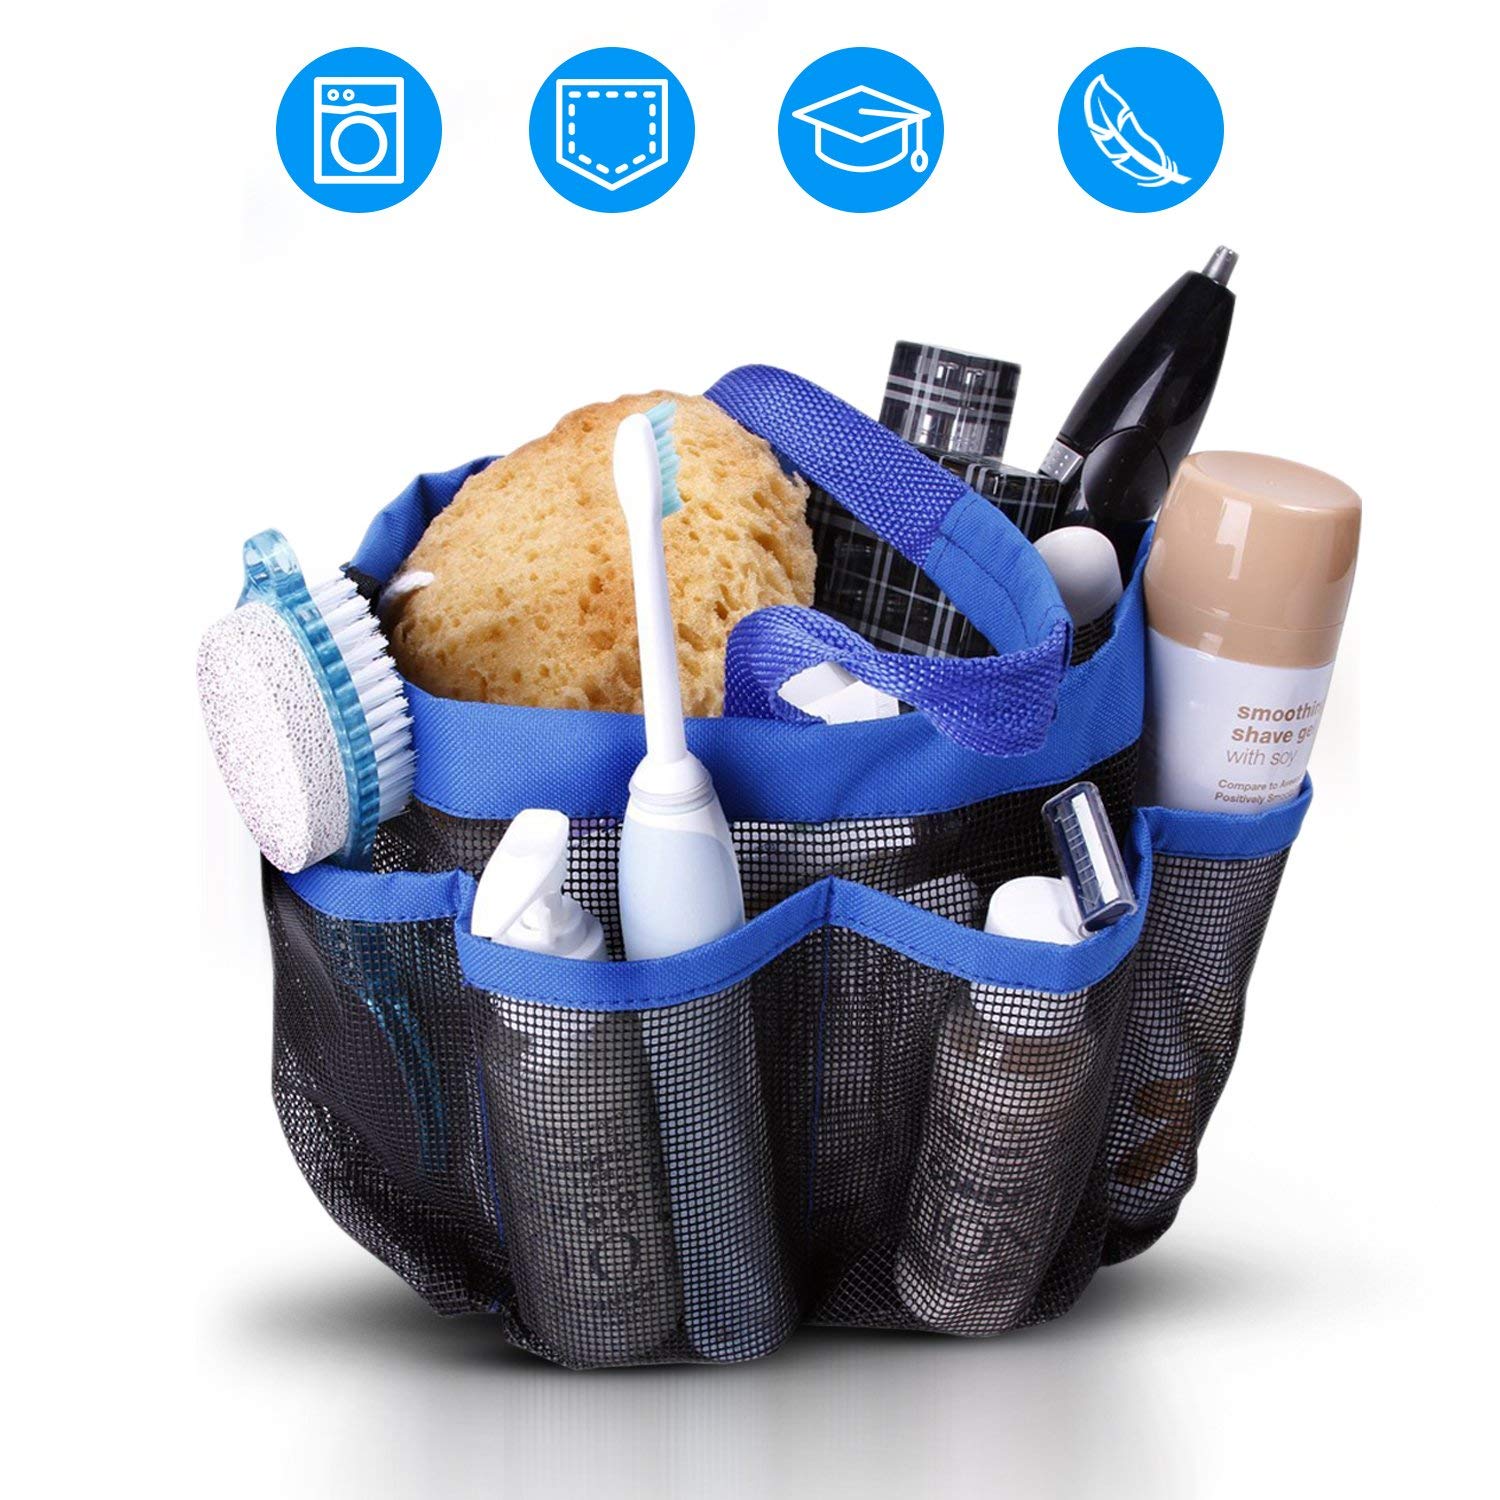 Mesh Shower Caddy Portable Tote - College Dorm Room Essentials Accessories Organizer Shower Bag for Bathroom, Gym, Travel - ebowsos